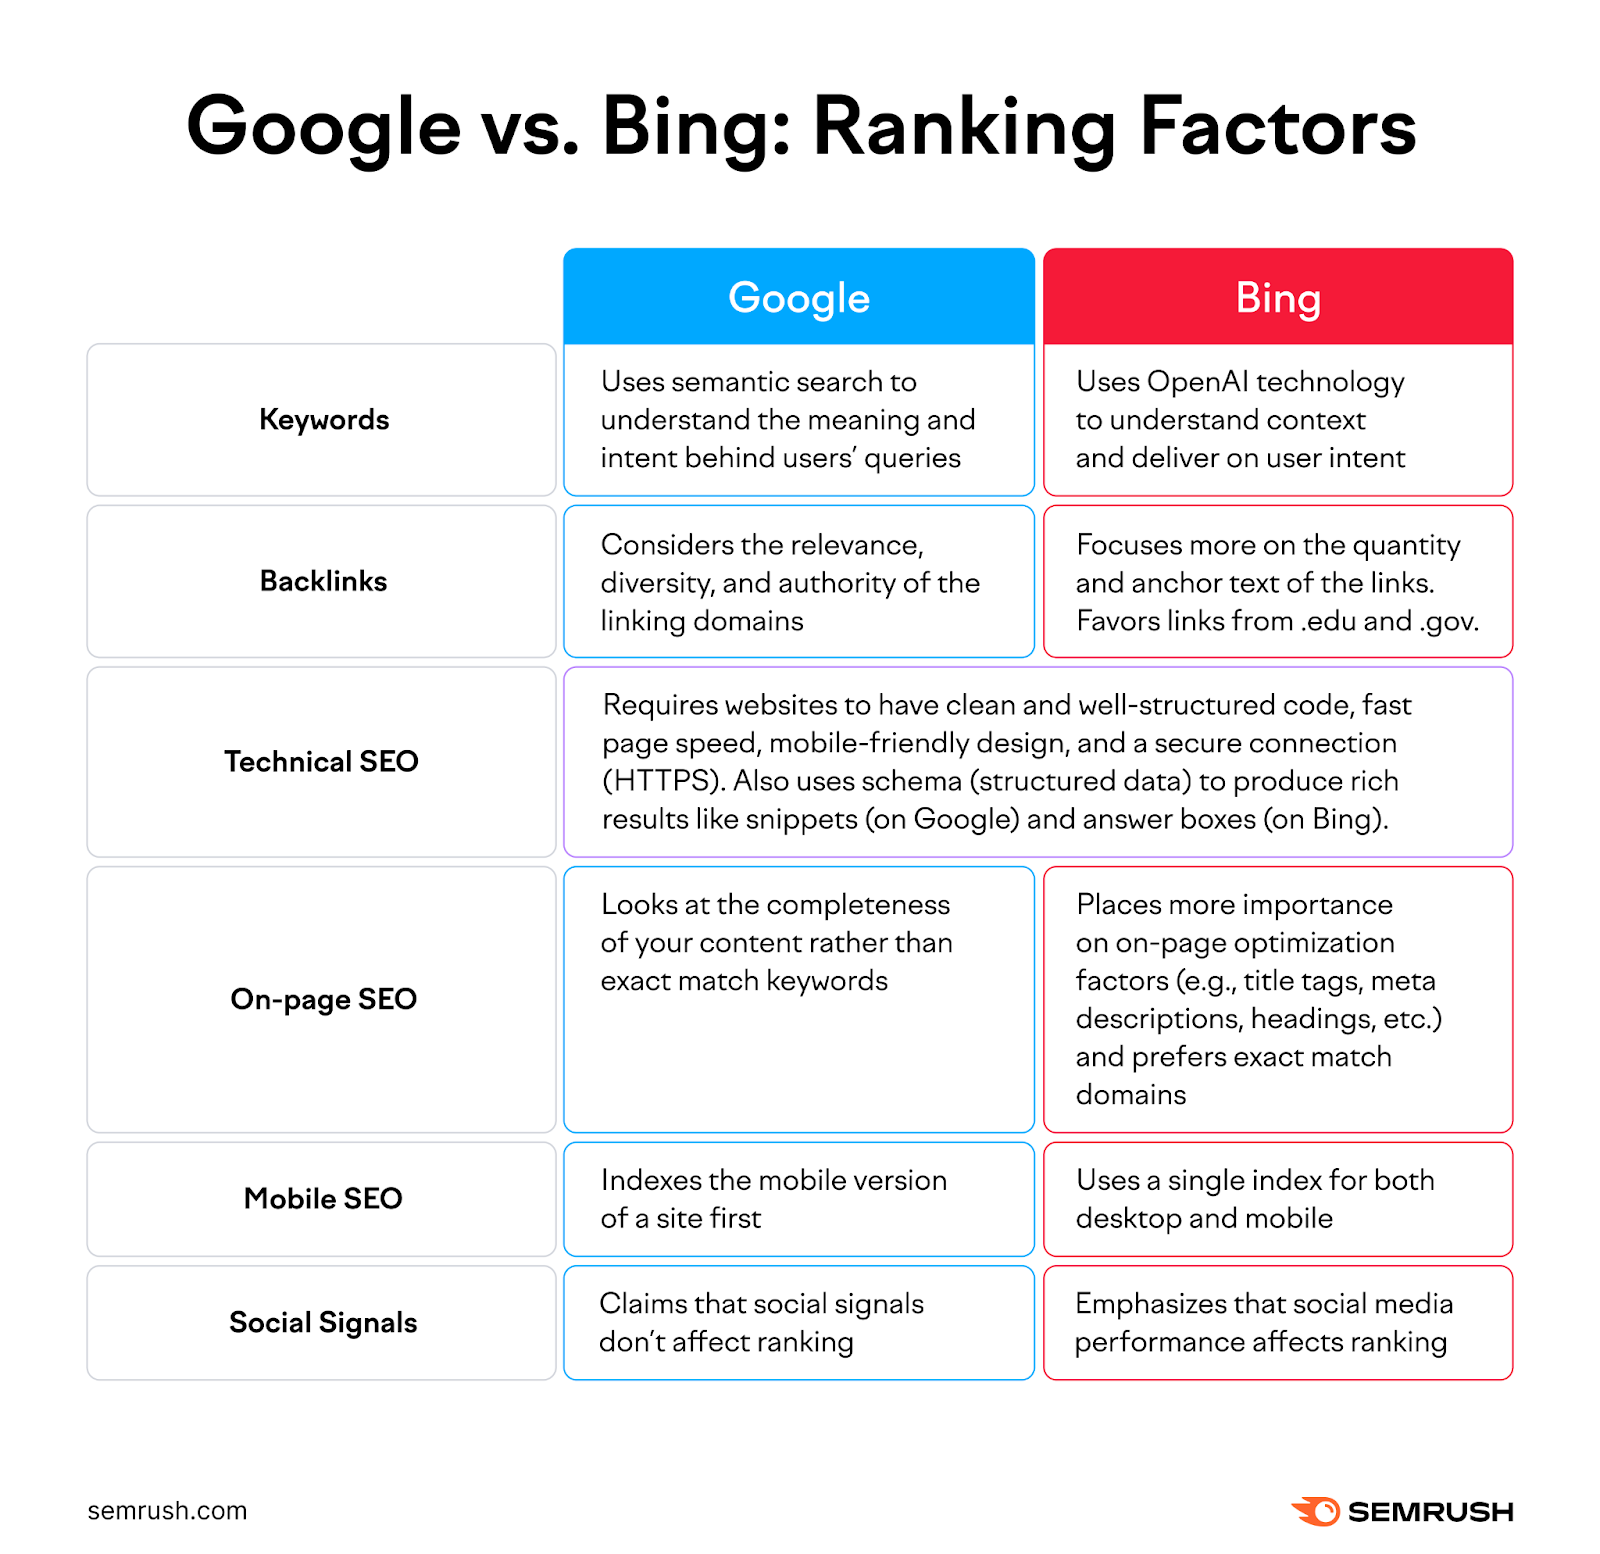 An image listing Google vs. Bing ranking factors